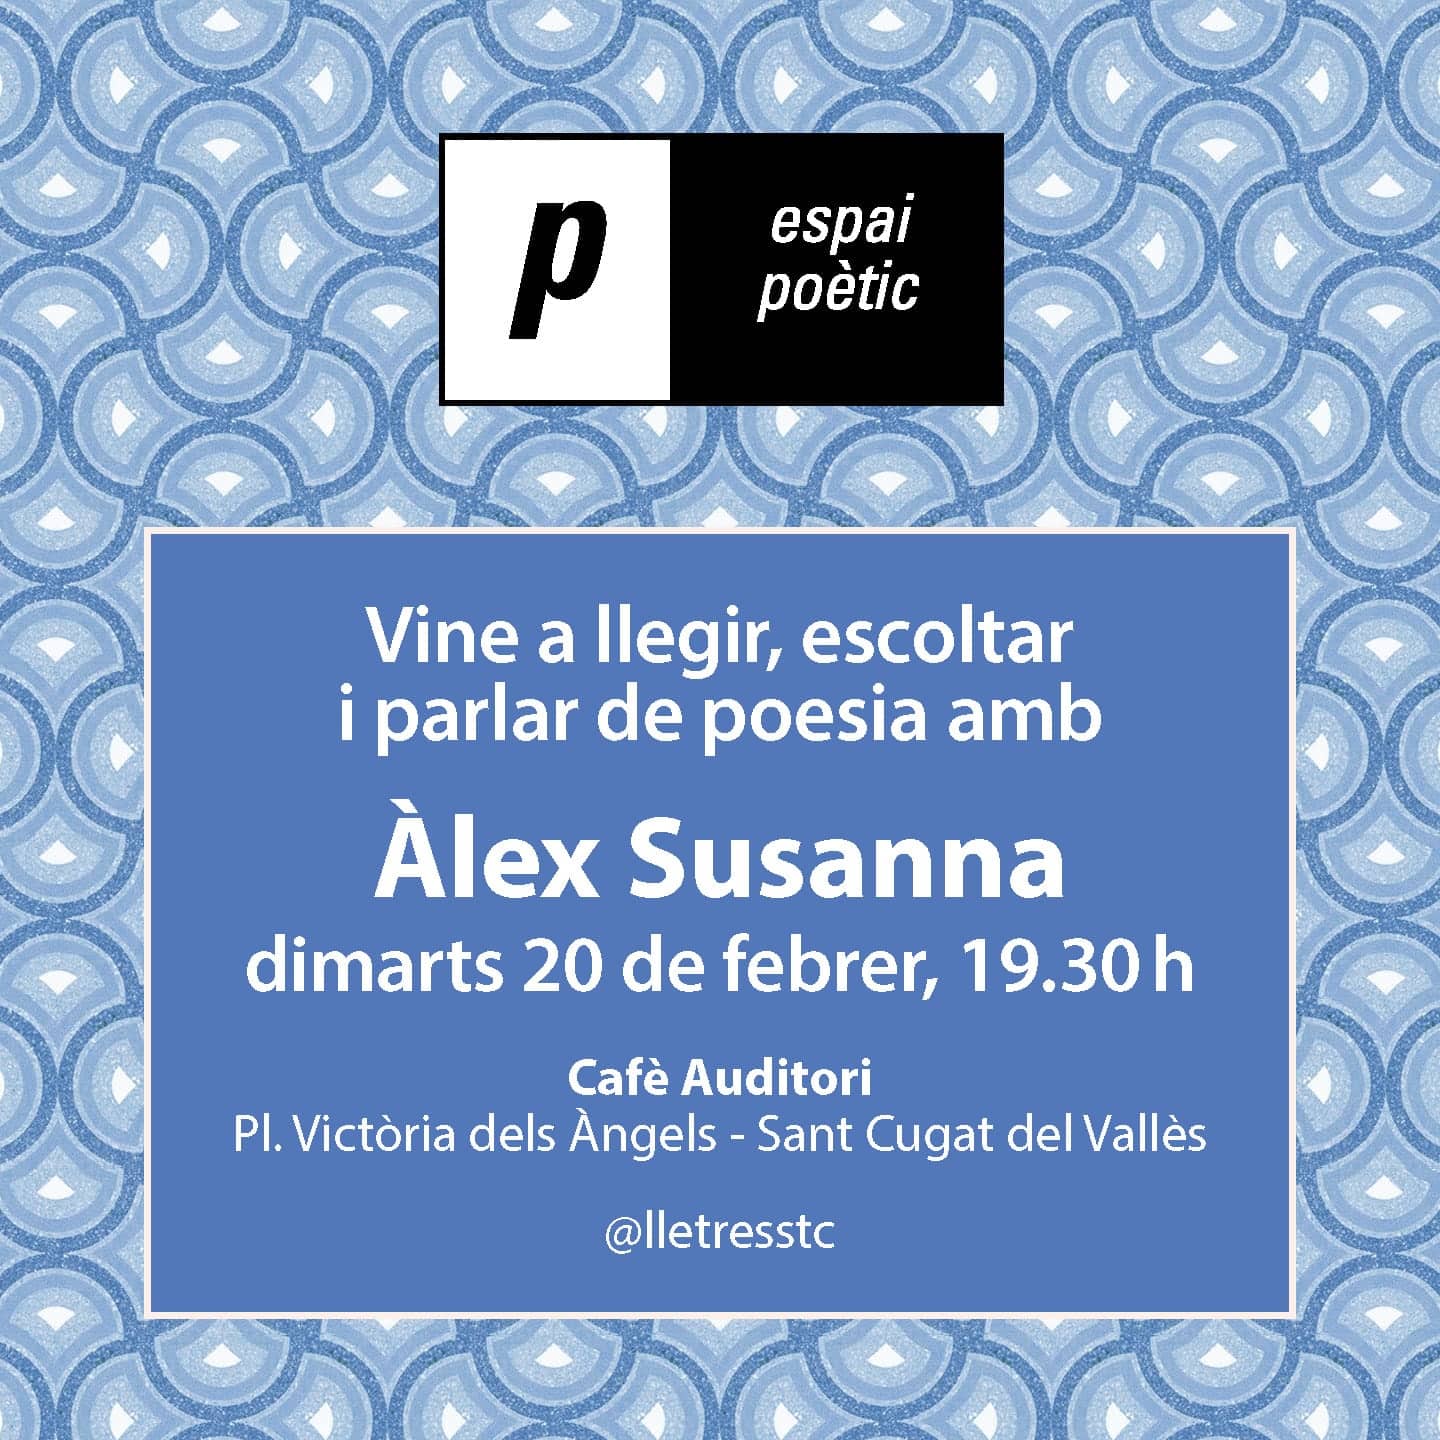 Espai poètic: Àlex Susanna